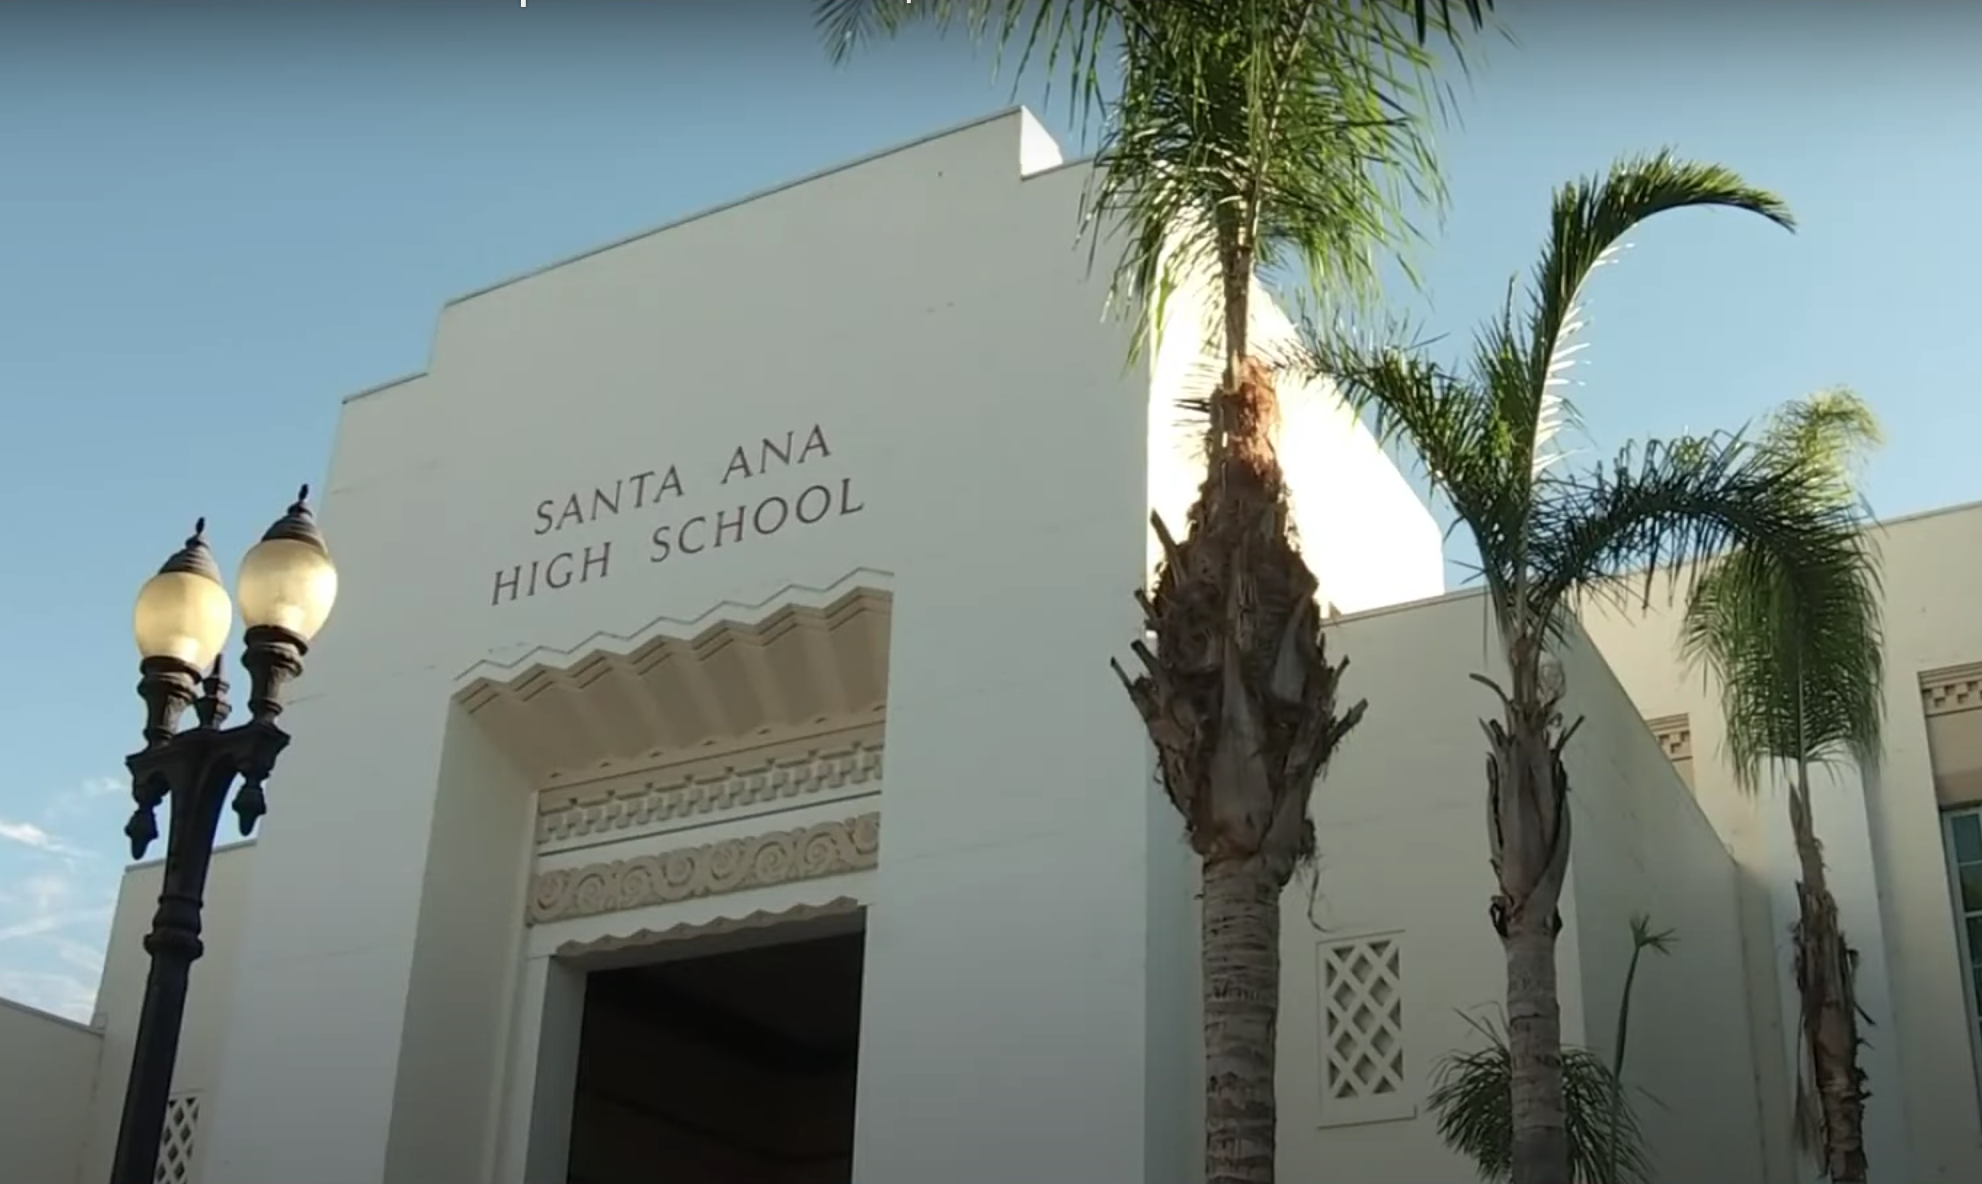 Santa Ana High School